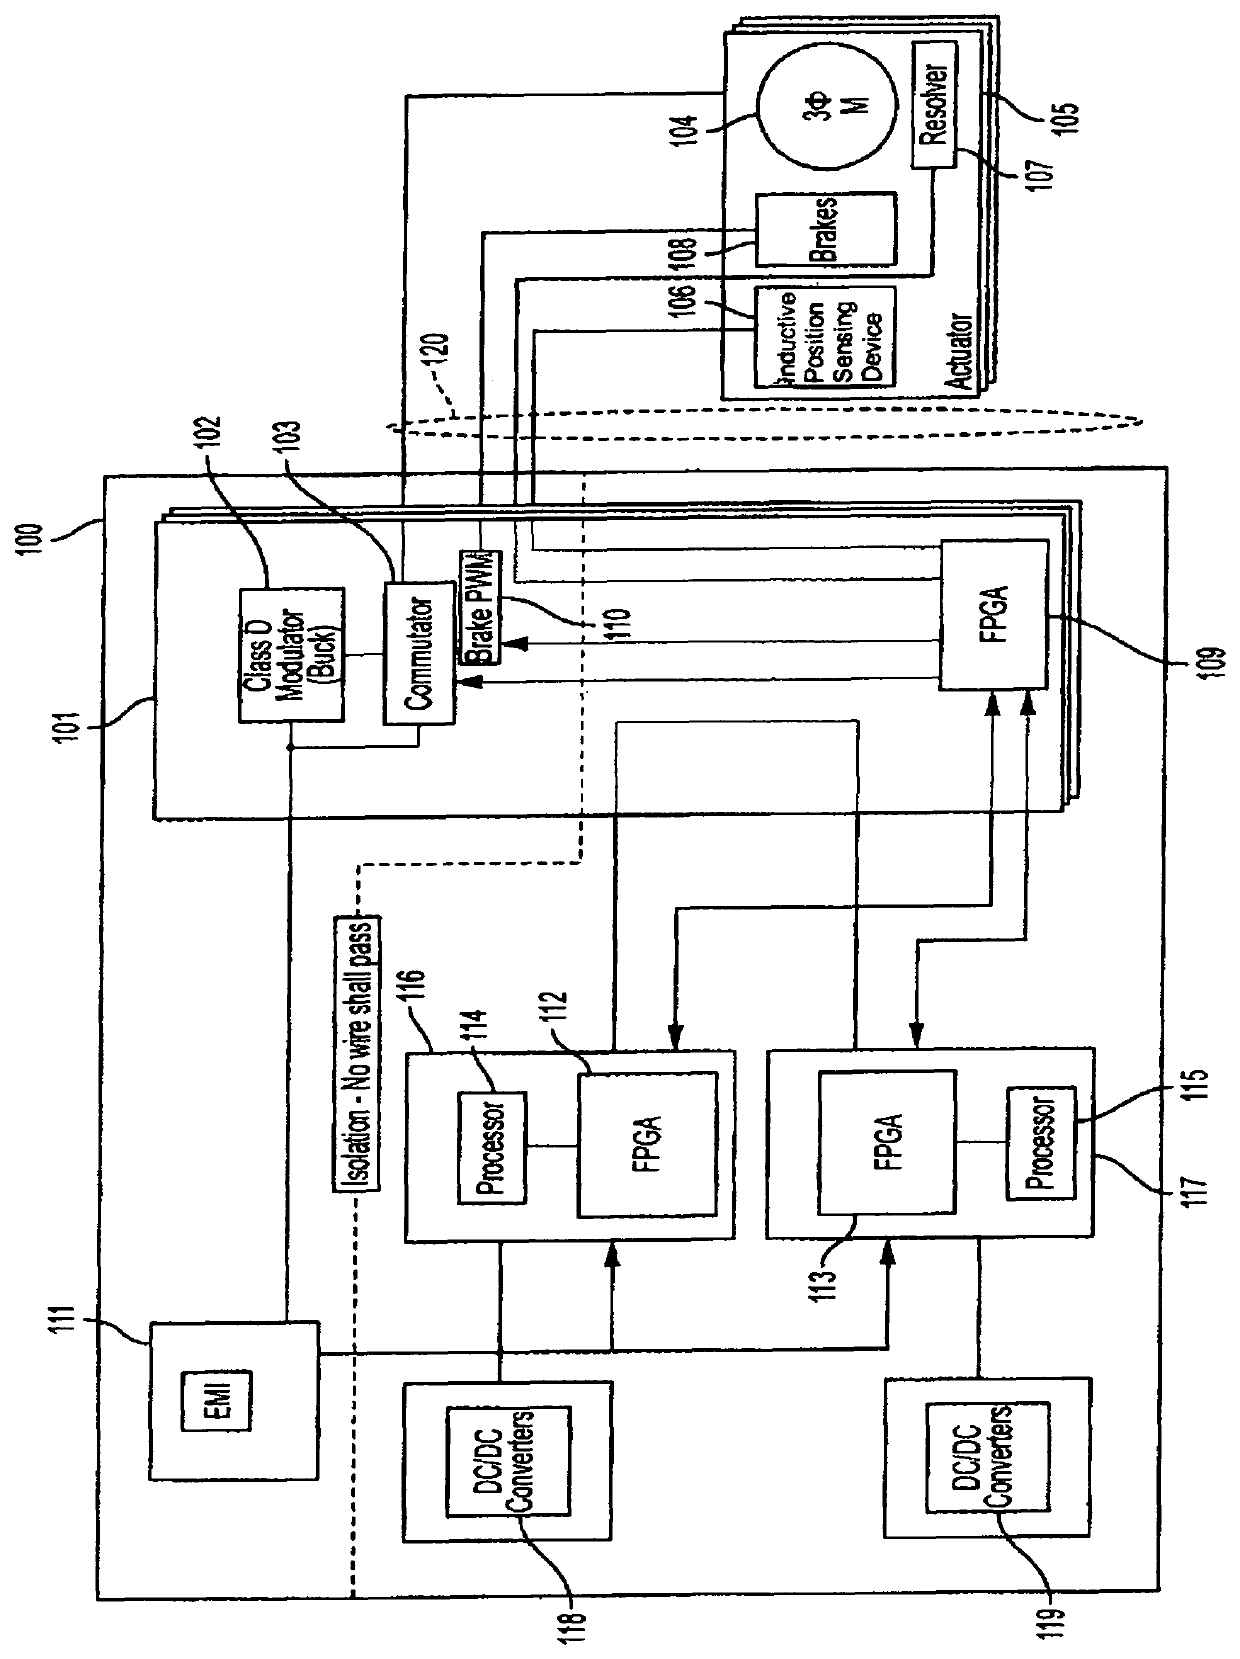 Robot electronics unit (REU) motor controller board (MCB)